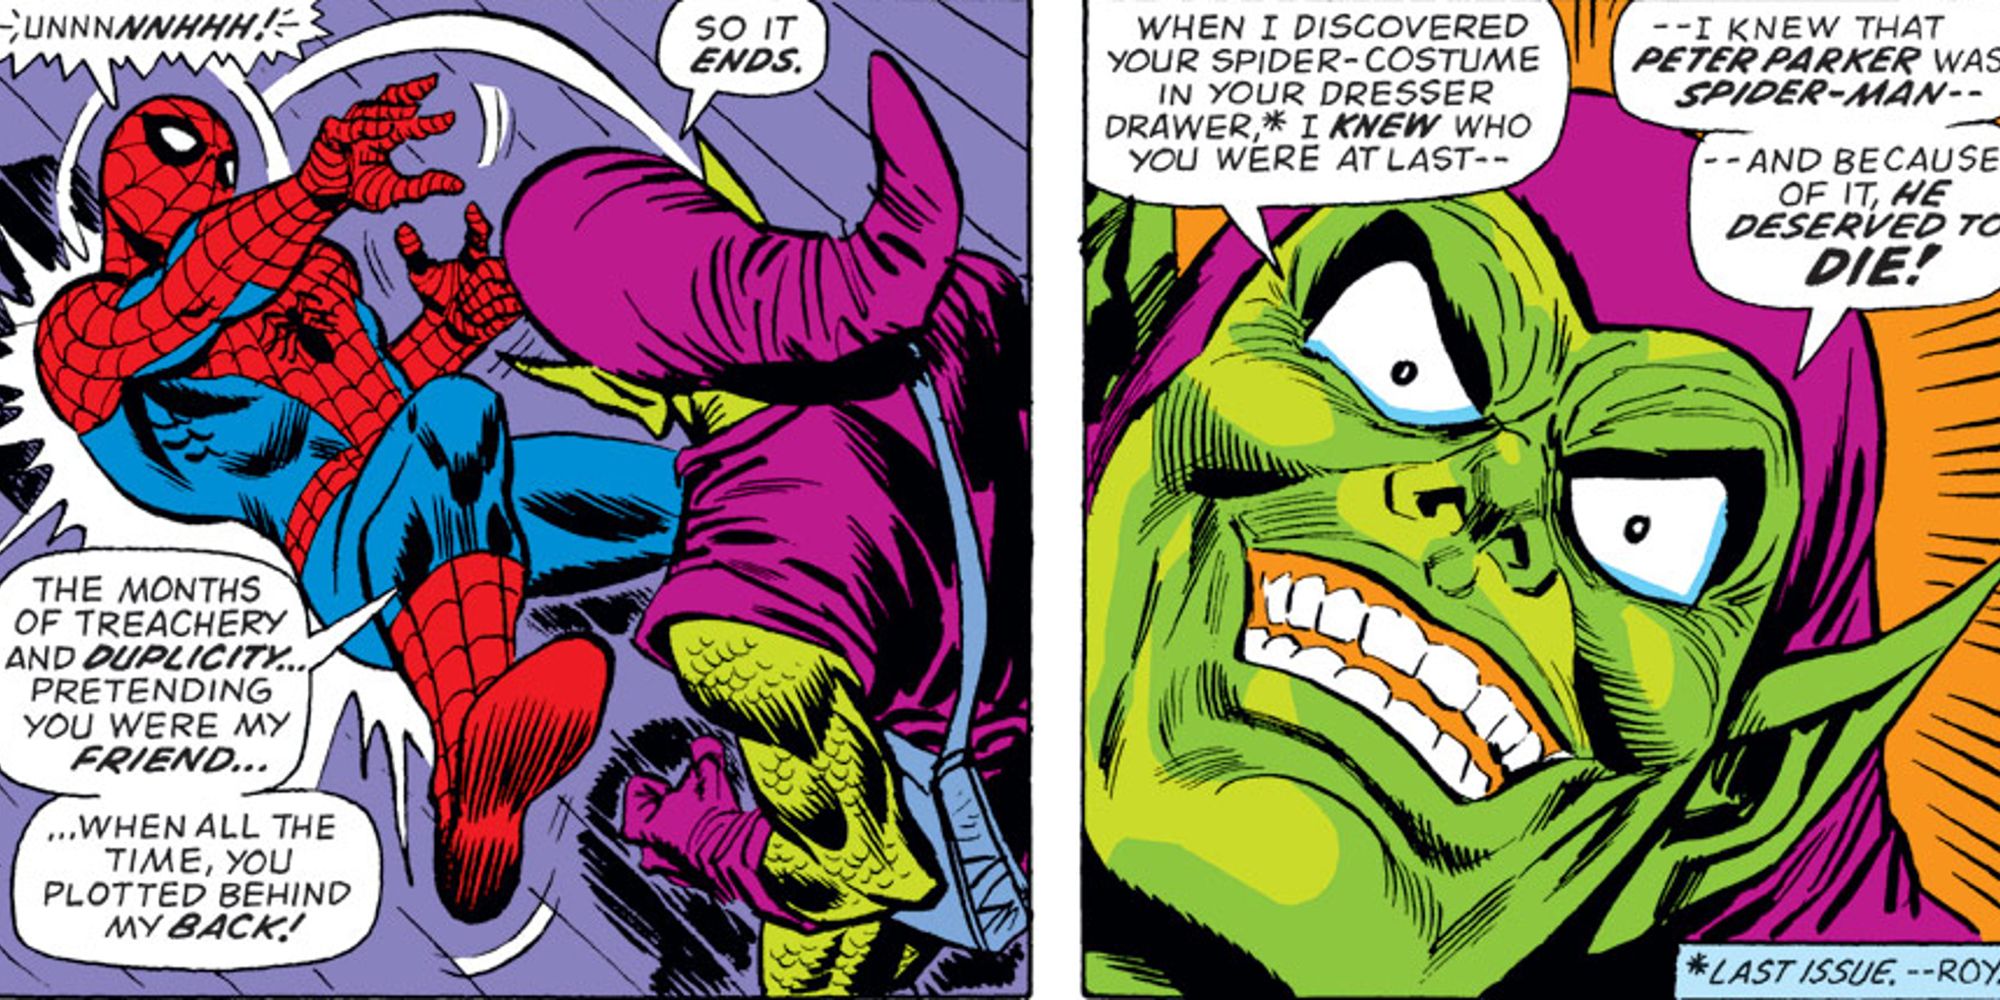 Spider-Man fighting Harry Osborn as Green Goblin in The Amazing Spider-Man #136